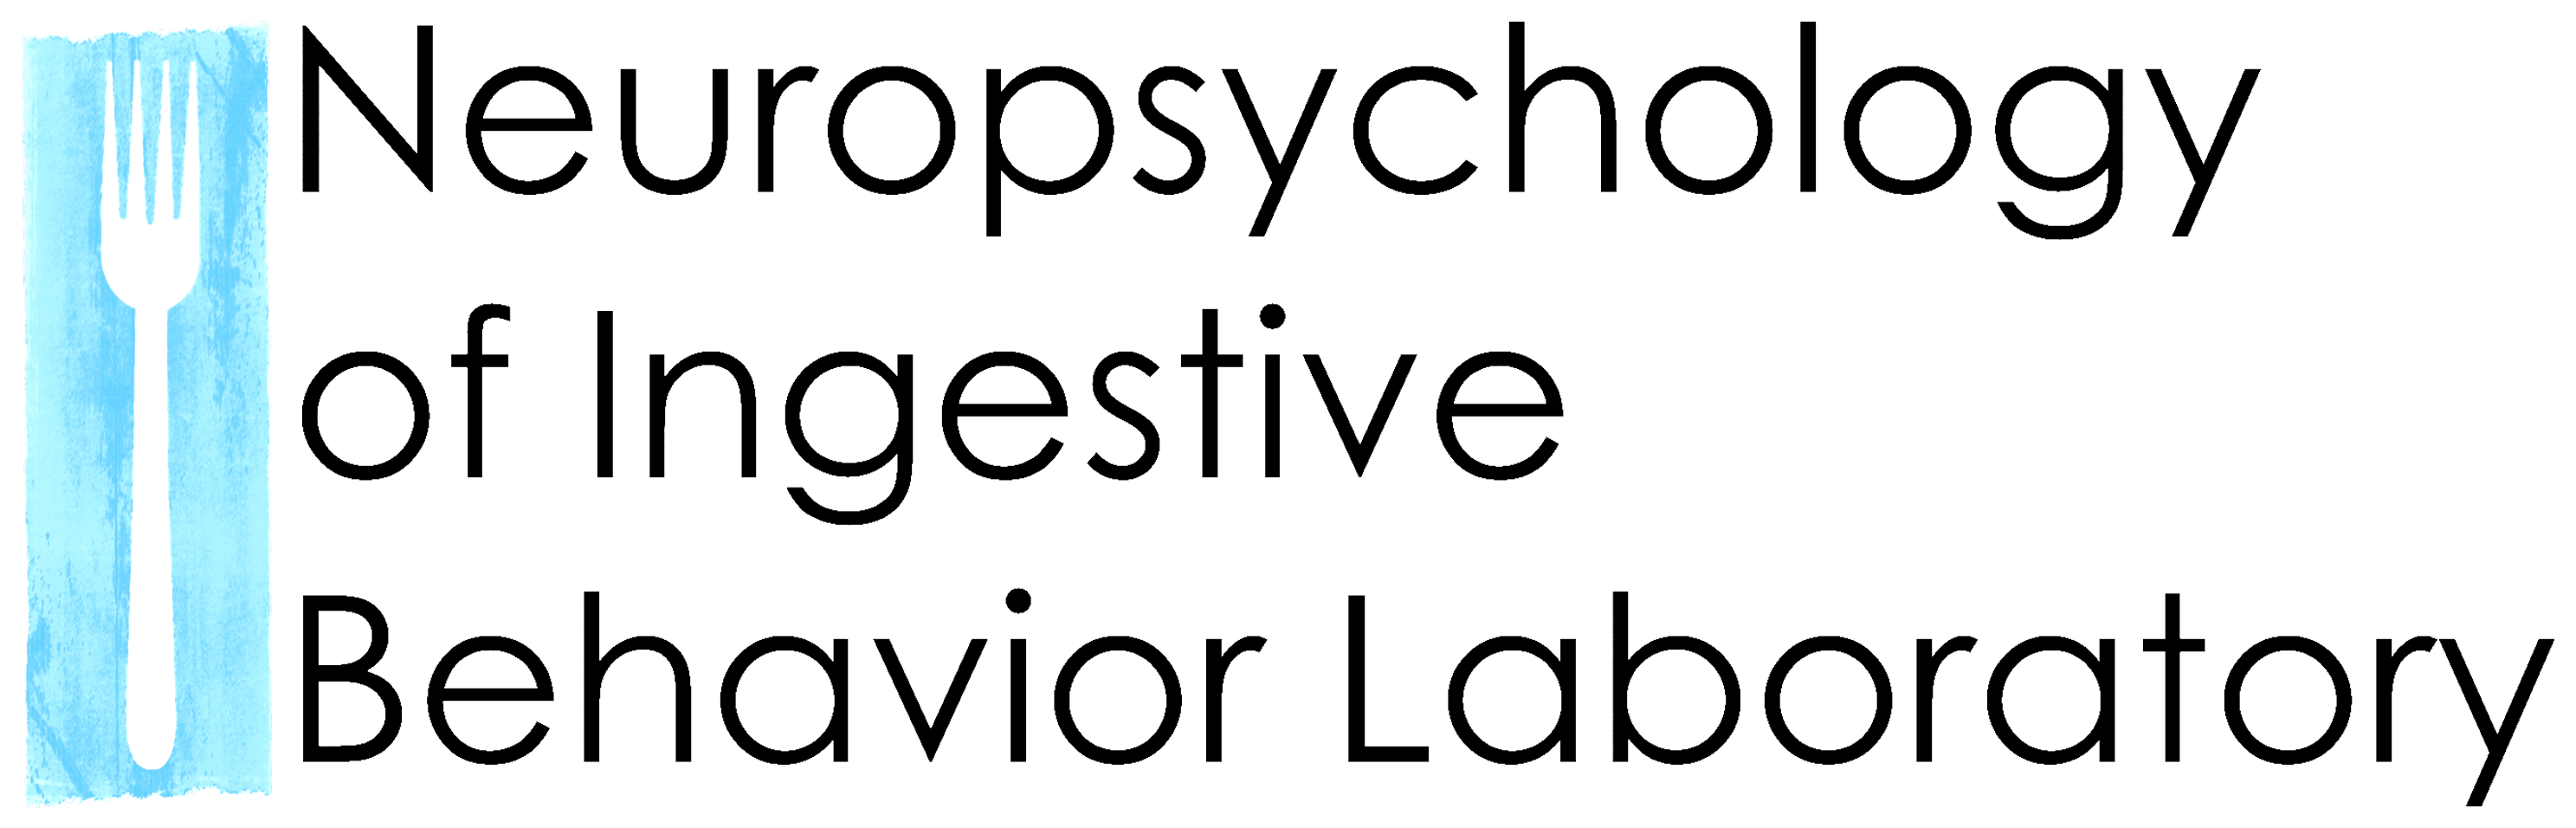 Neuropsychology of Ingestive Behavior Laboratory